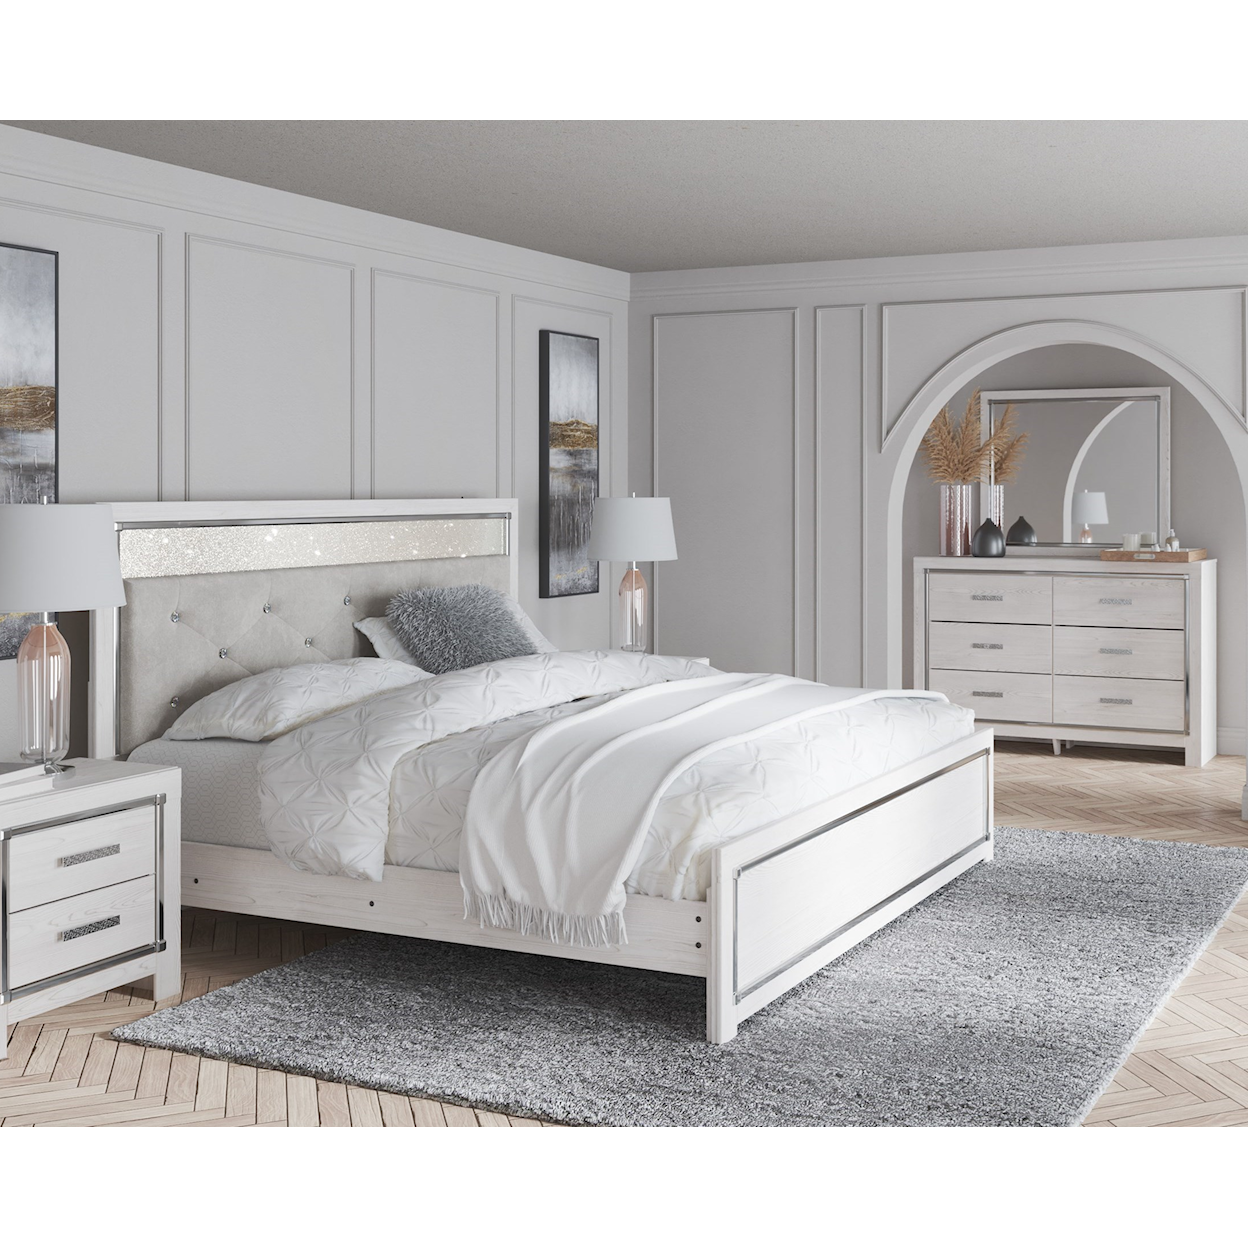 Ashley Furniture Signature Design Altyra King Bedroom Set